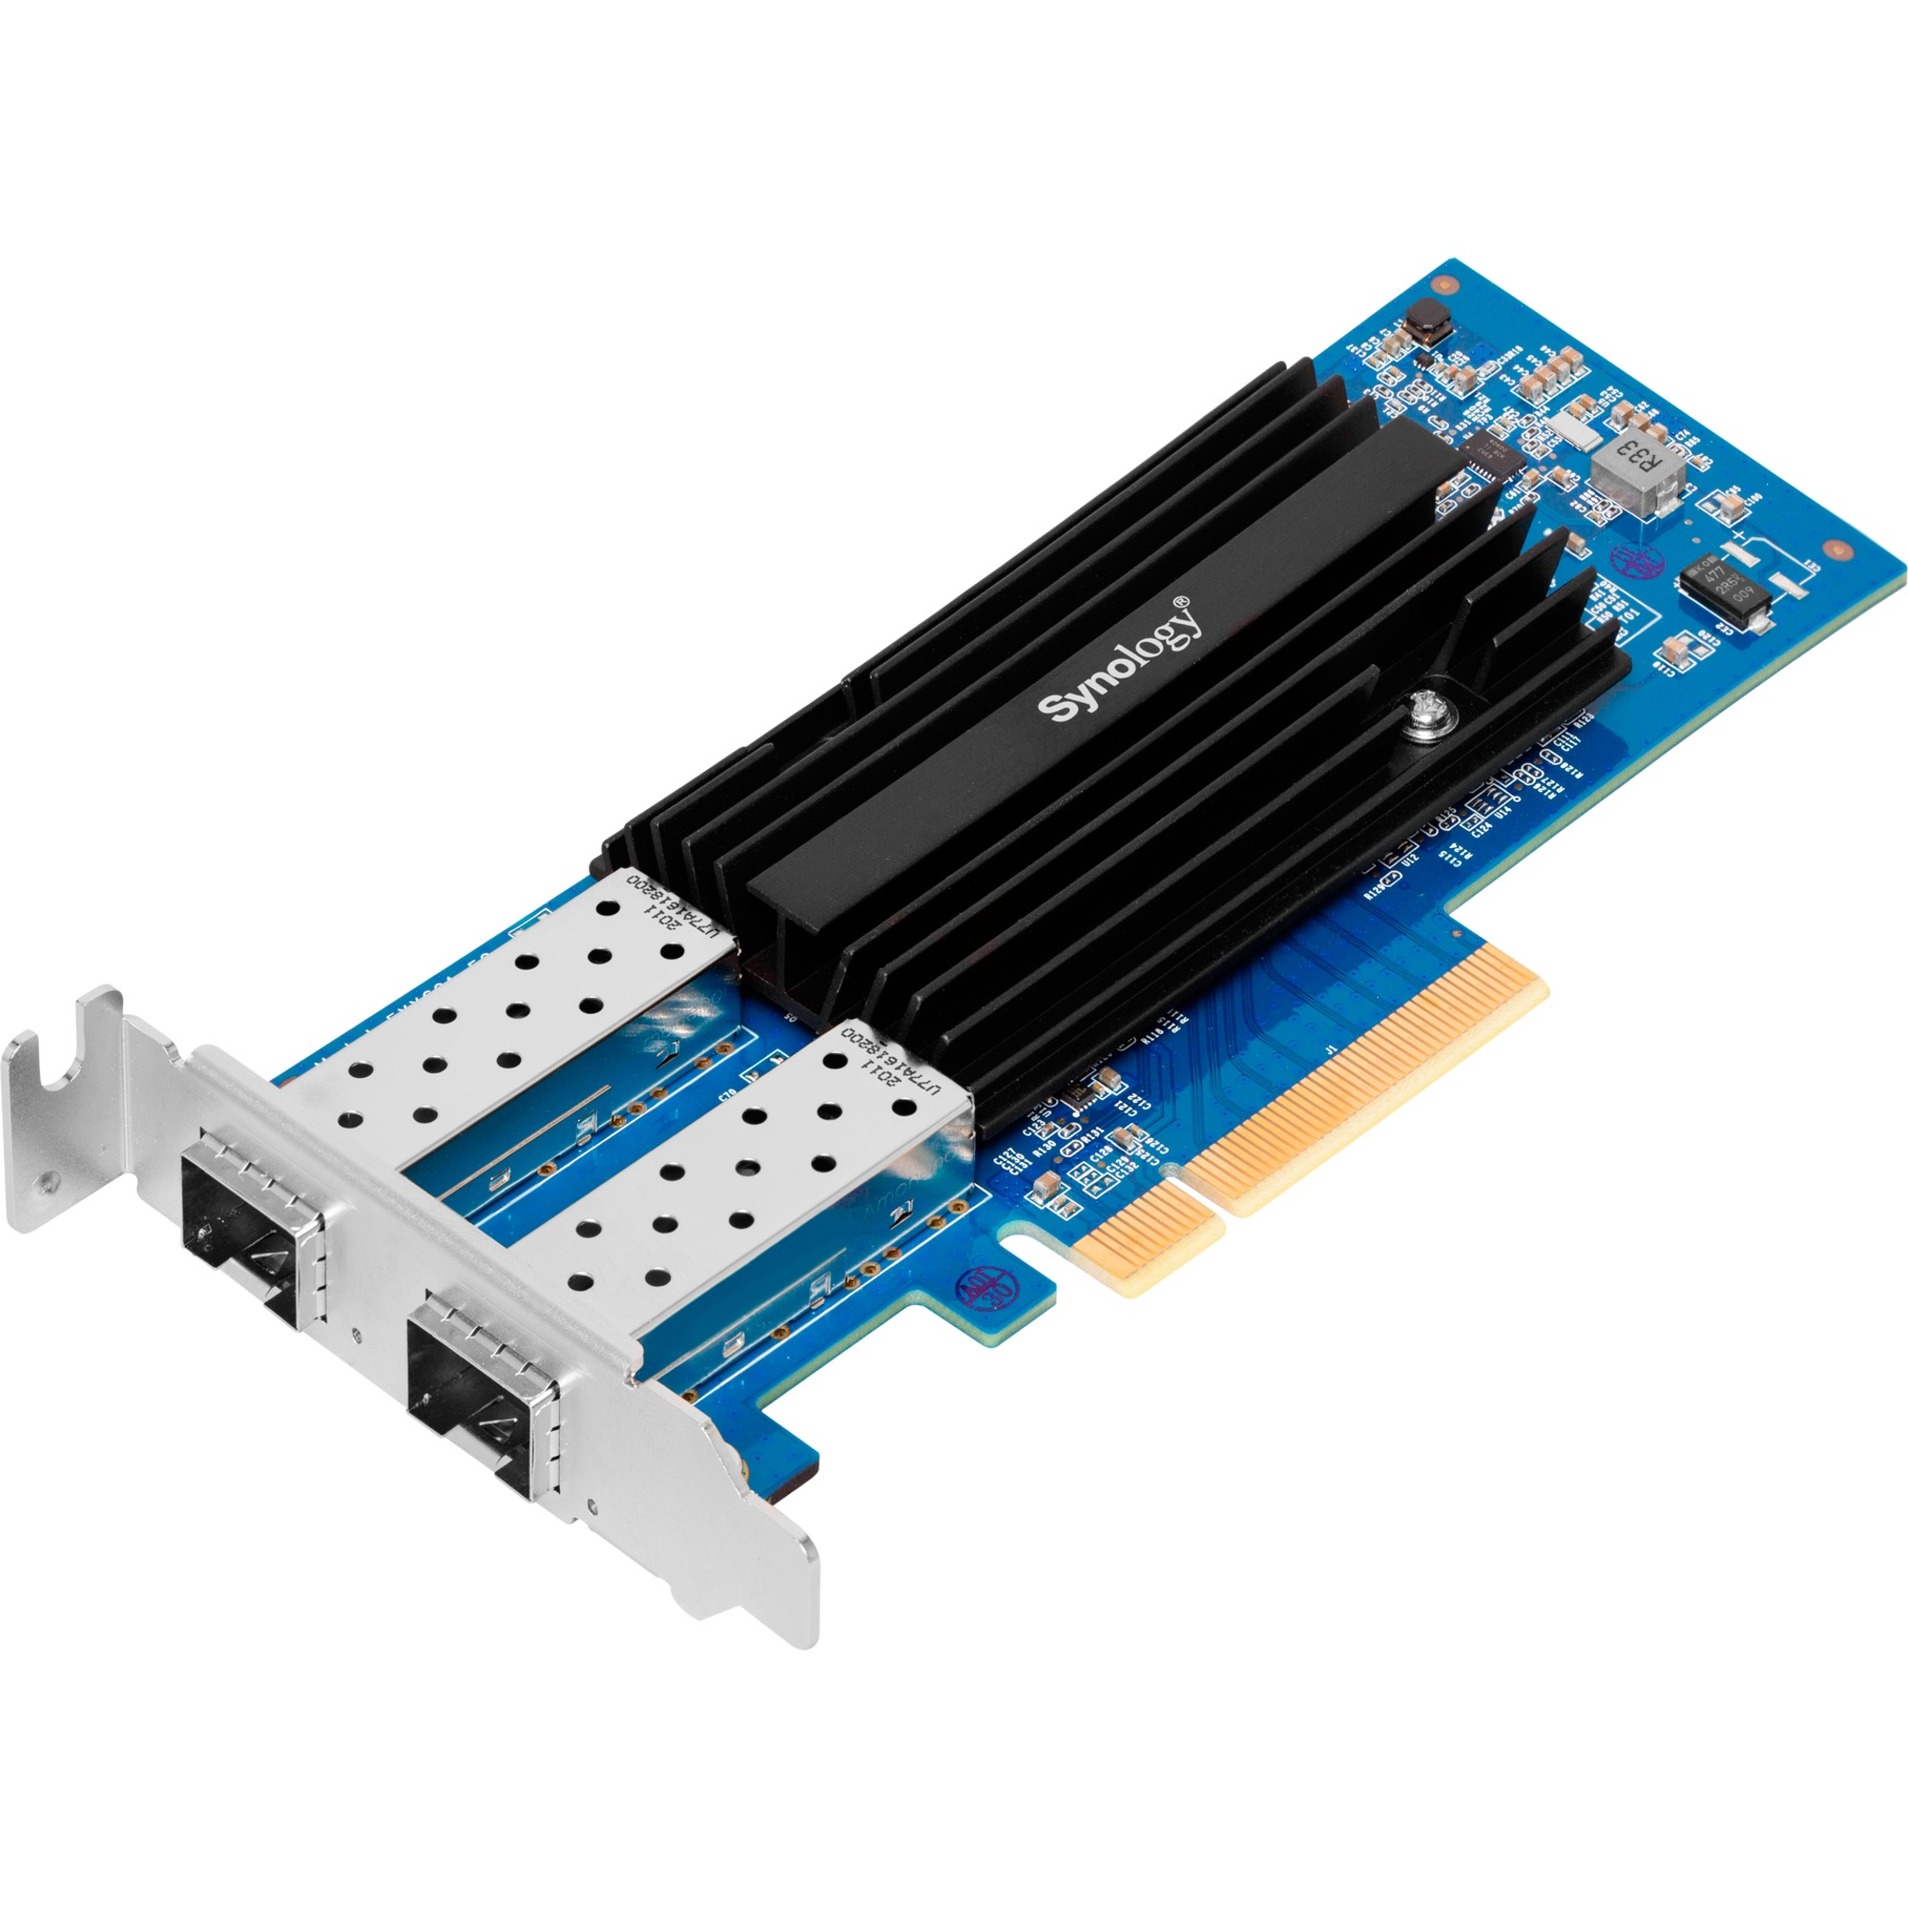 Image of Alternate - E10G21-F2 PCIX 8 10 GBitadapter SFP+, LAN-Adapter online einkaufen bei Alternate